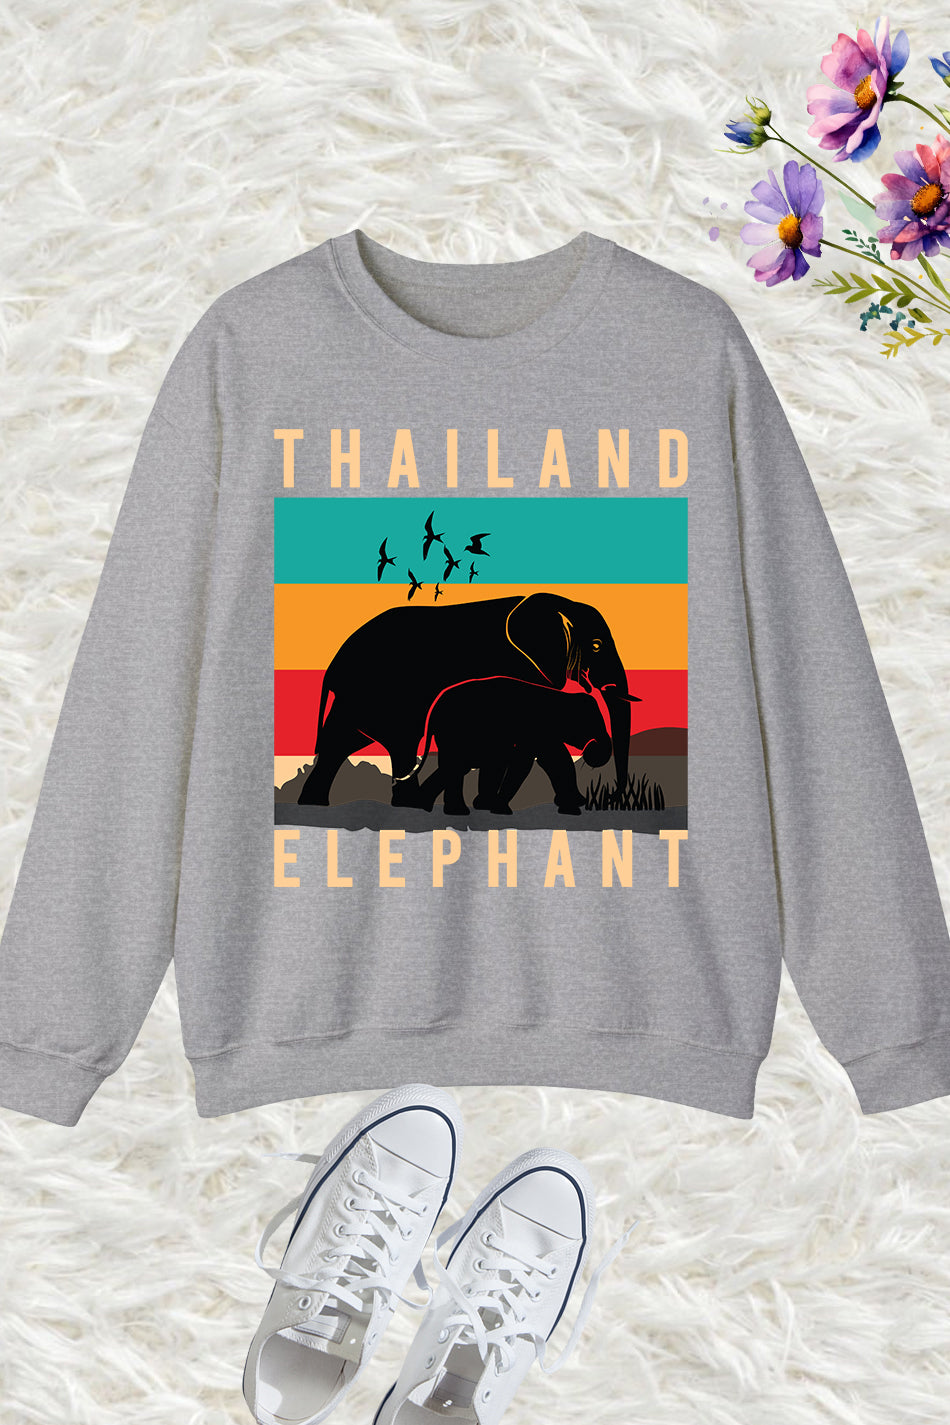 Thailand Elephant Sweatshirt